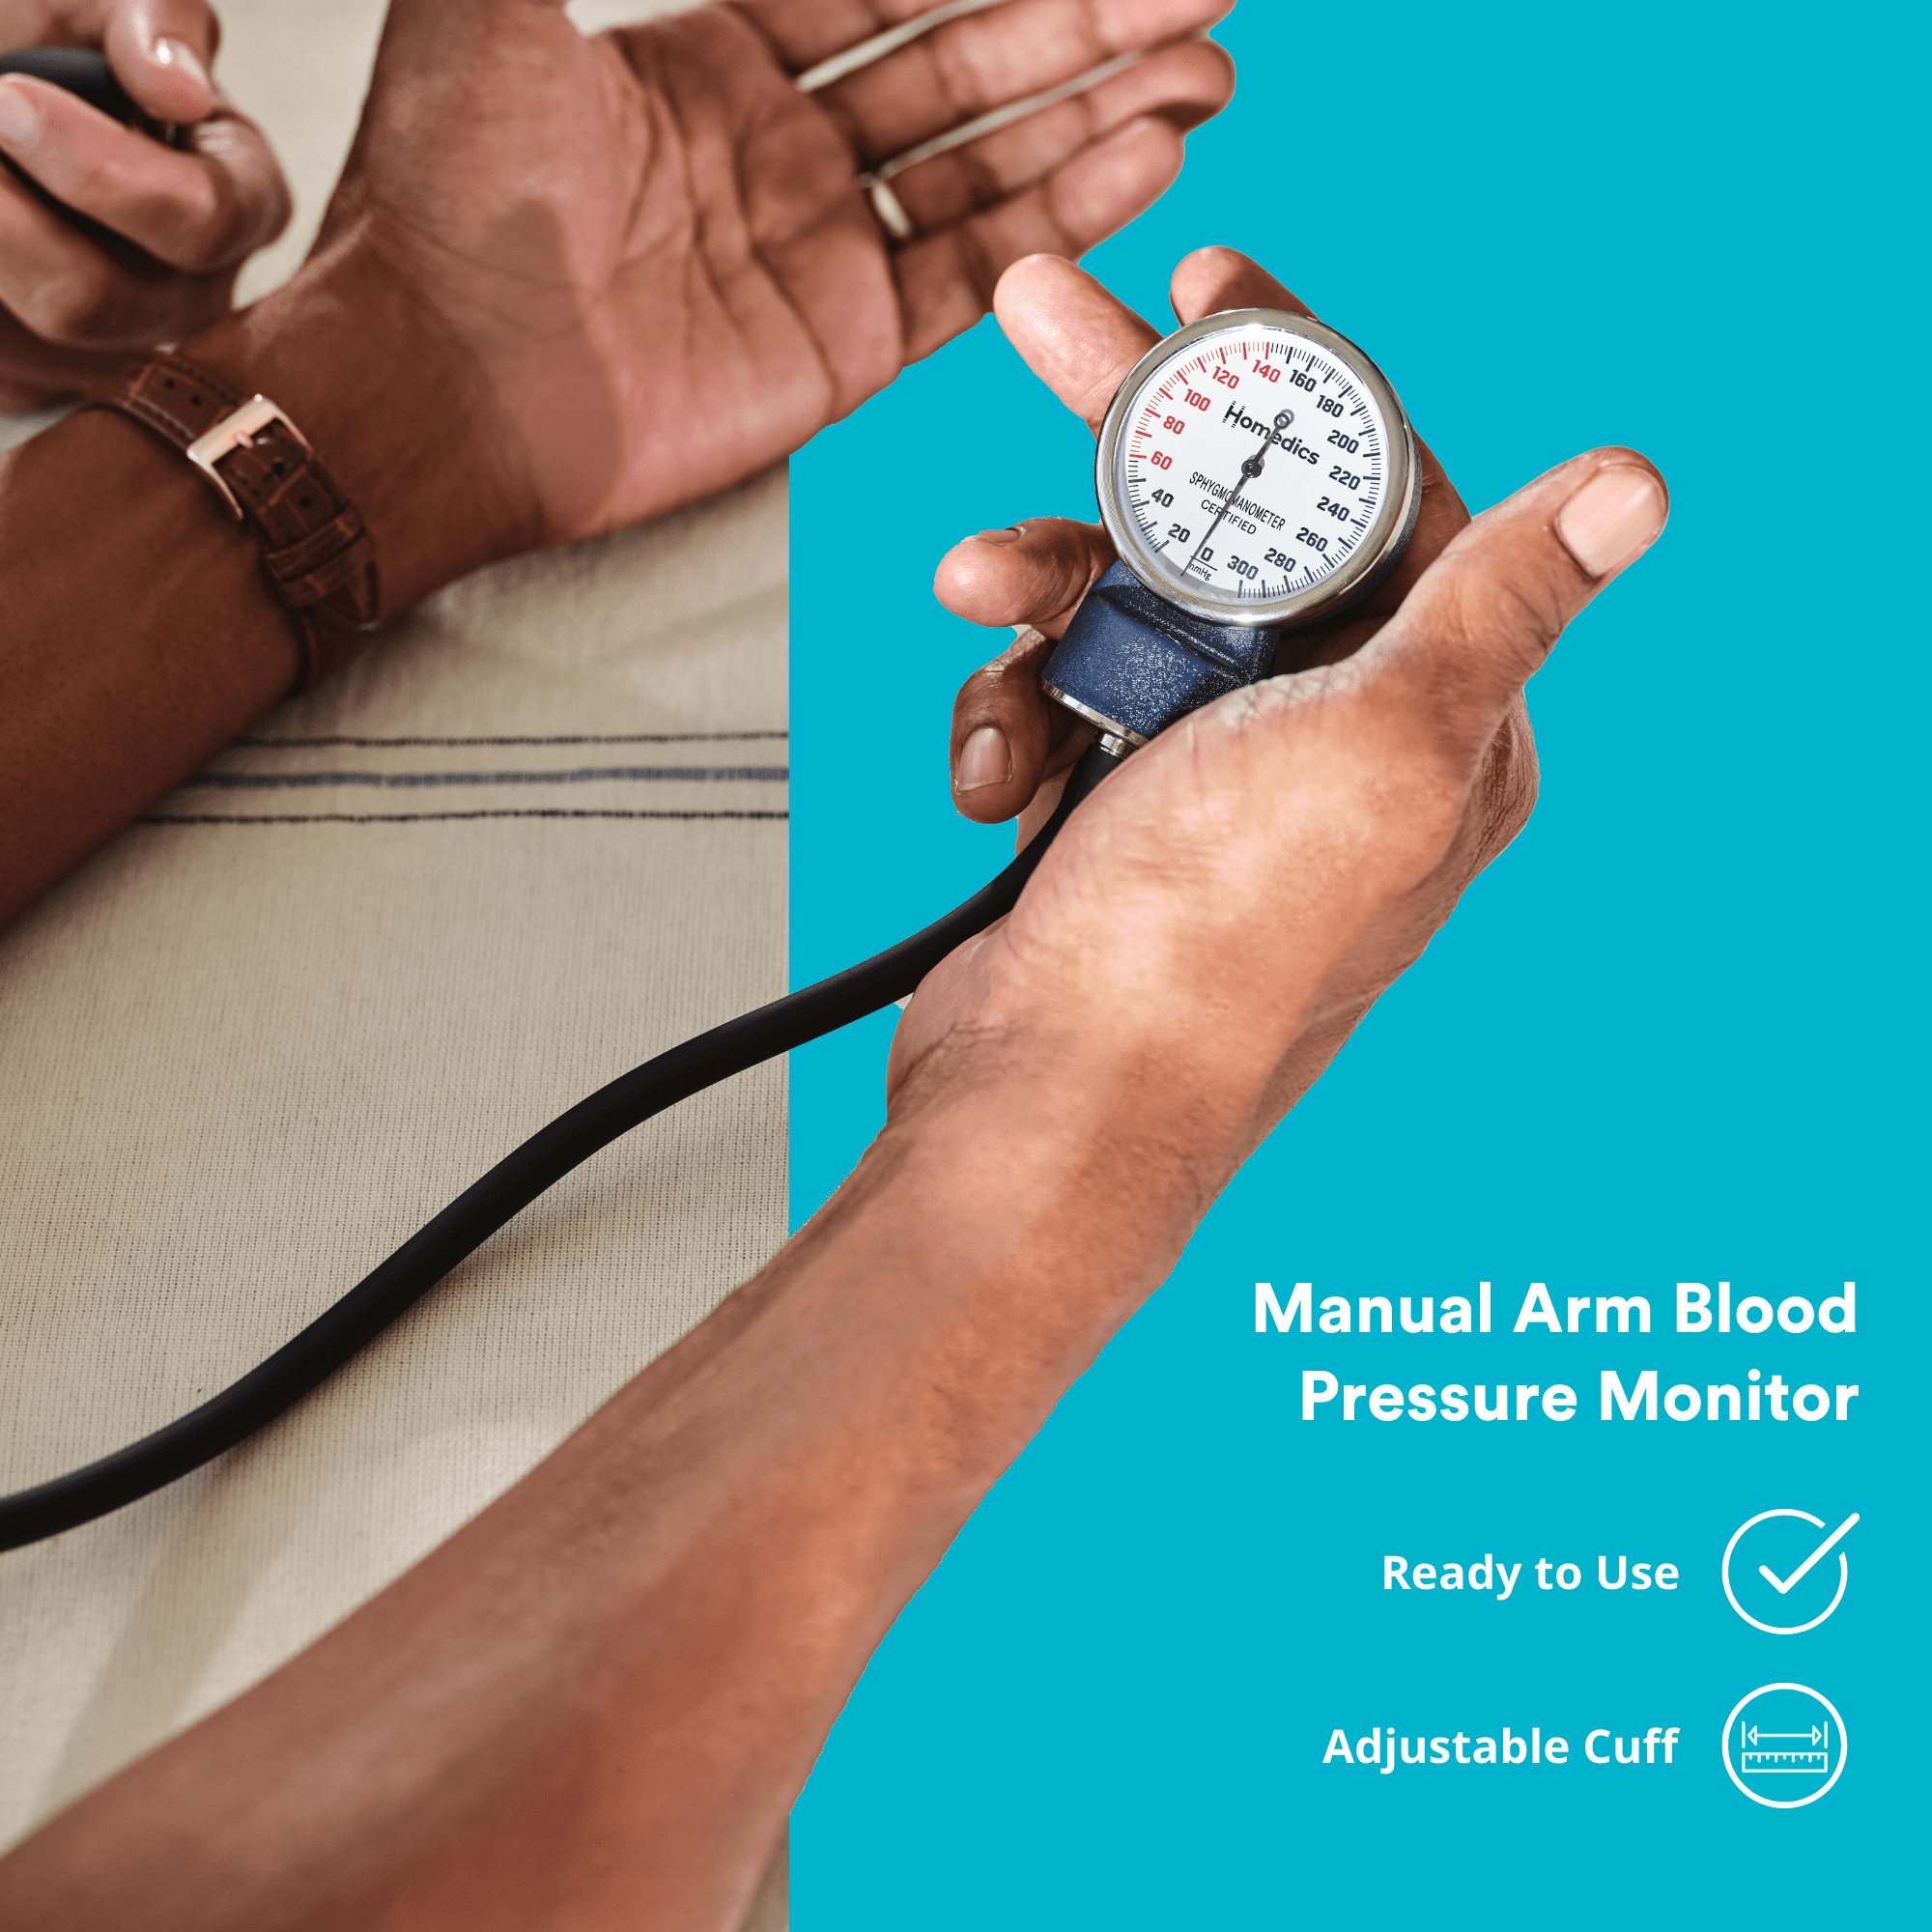 Homedics XL Upper Arm Cuff, Ultra Soft Replacement for Homedics Blood Pressure Monitors, Size: XL, 17 inch - 22 inch